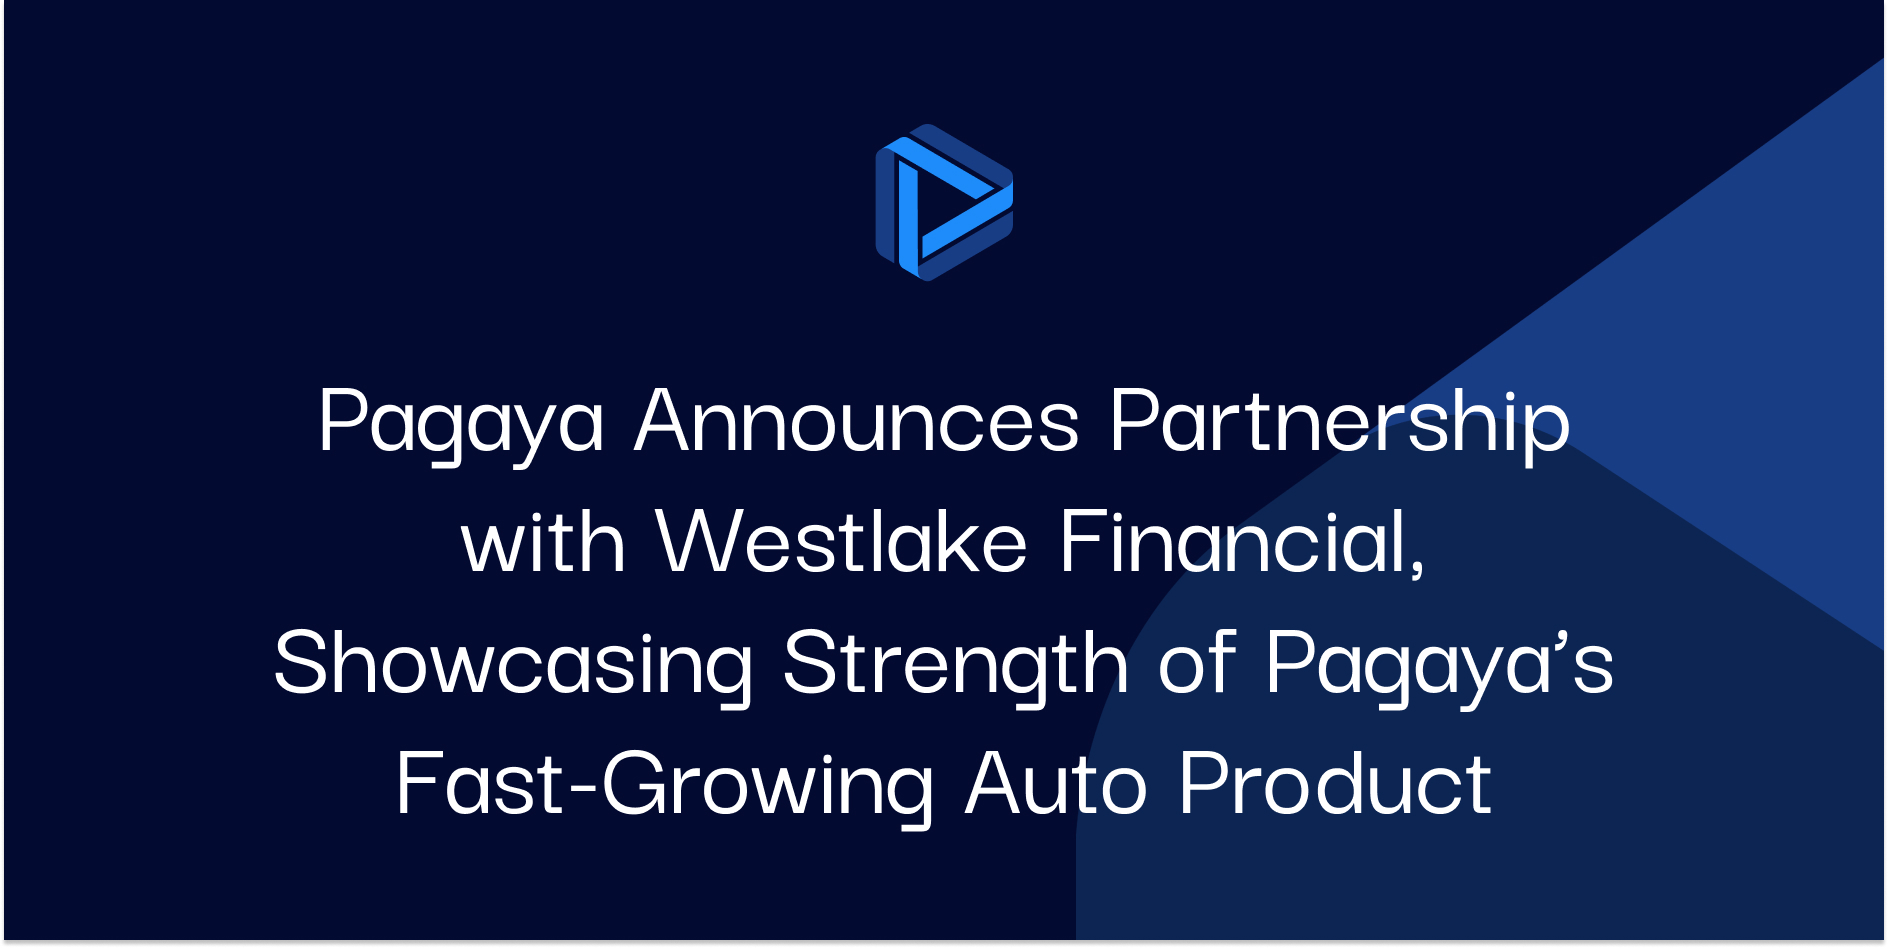 Pagaya Announces Partnership with Westlake Financial, Showcasing Strength of Pagaya’s Fast-Growing Auto Product